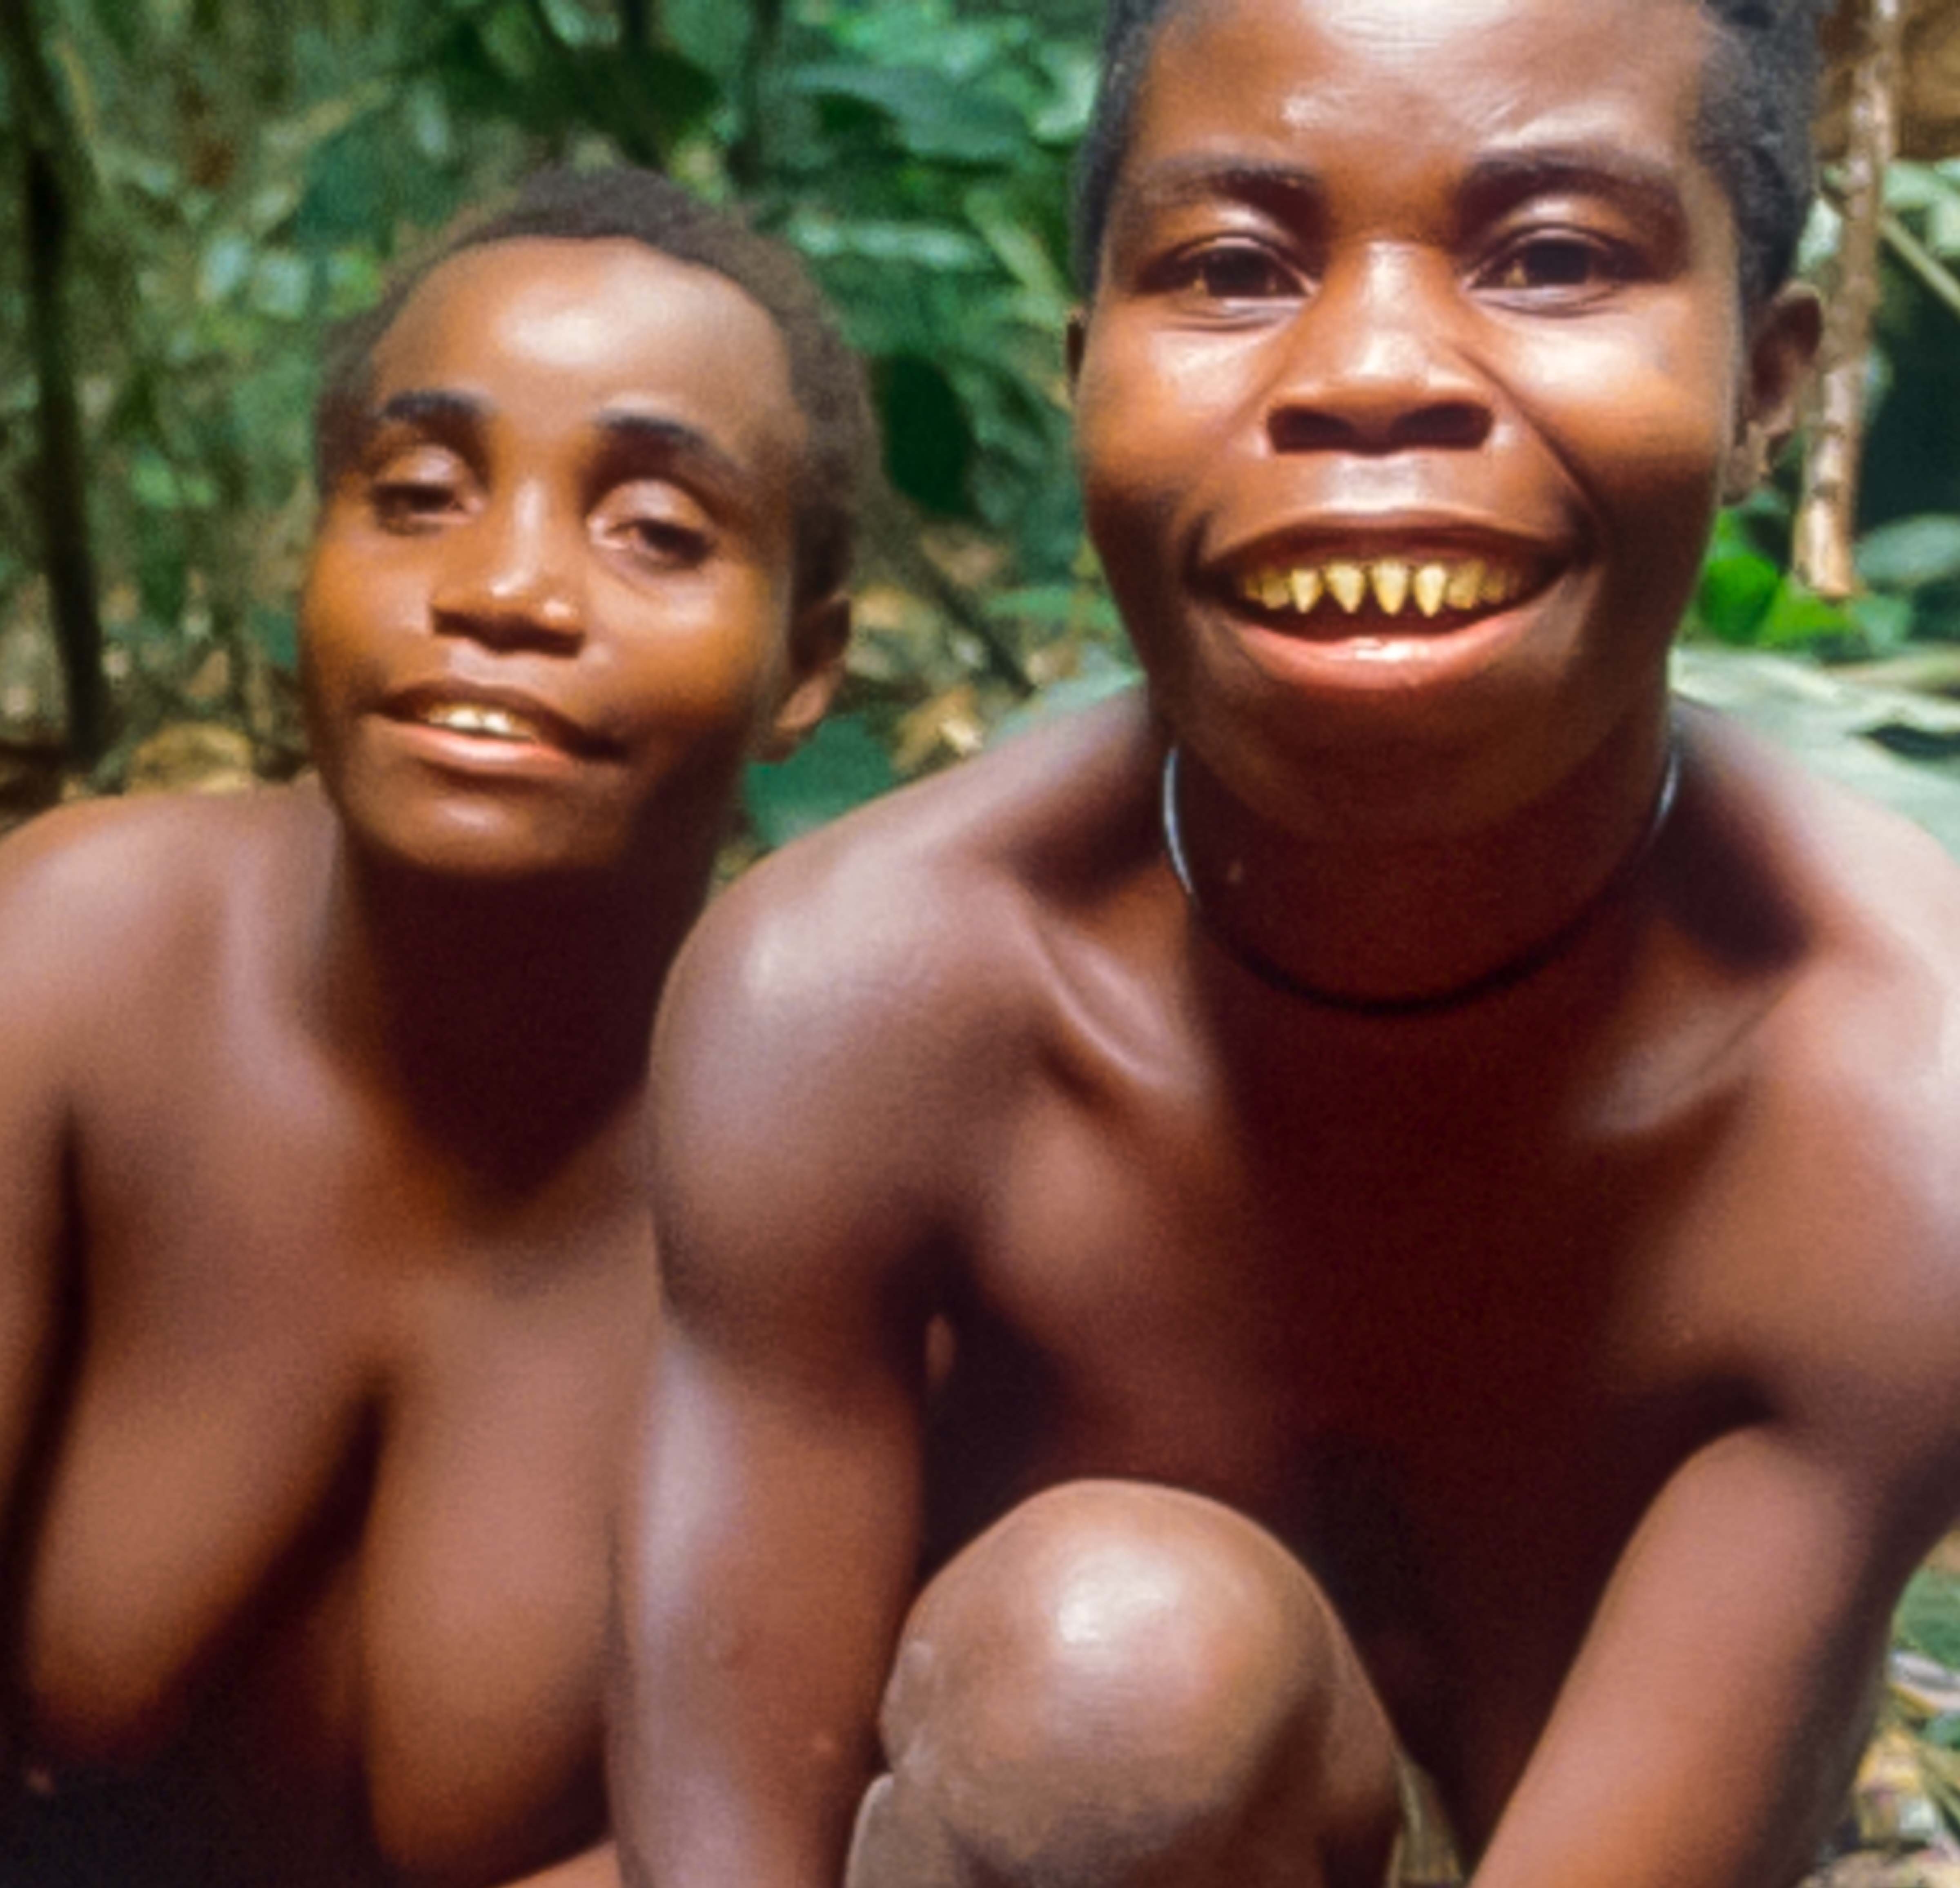 CAR, Pygmy Woman With Sharpened Teeth, 2000